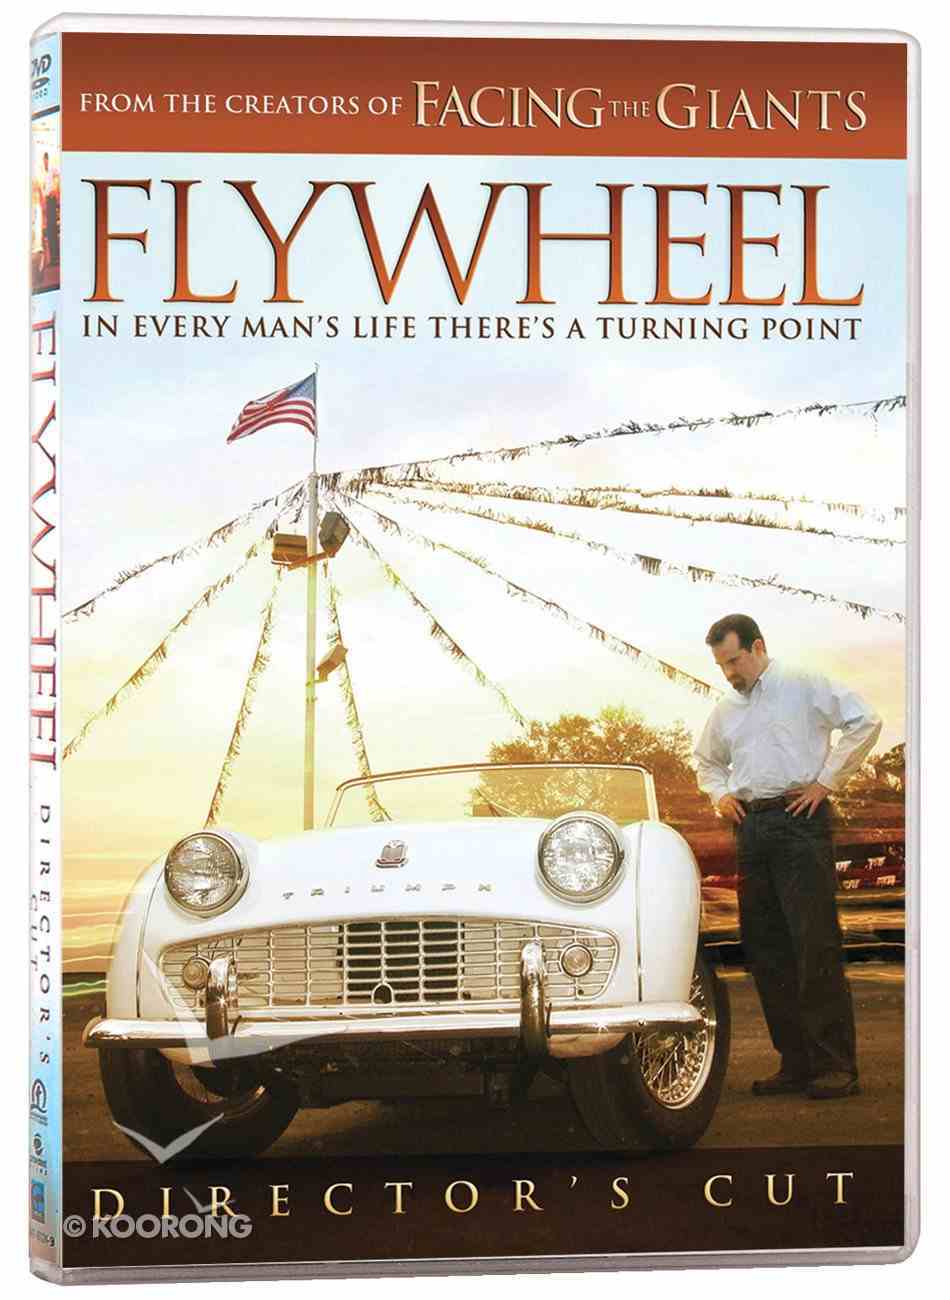 Flywheel (Director's Cut) DVD